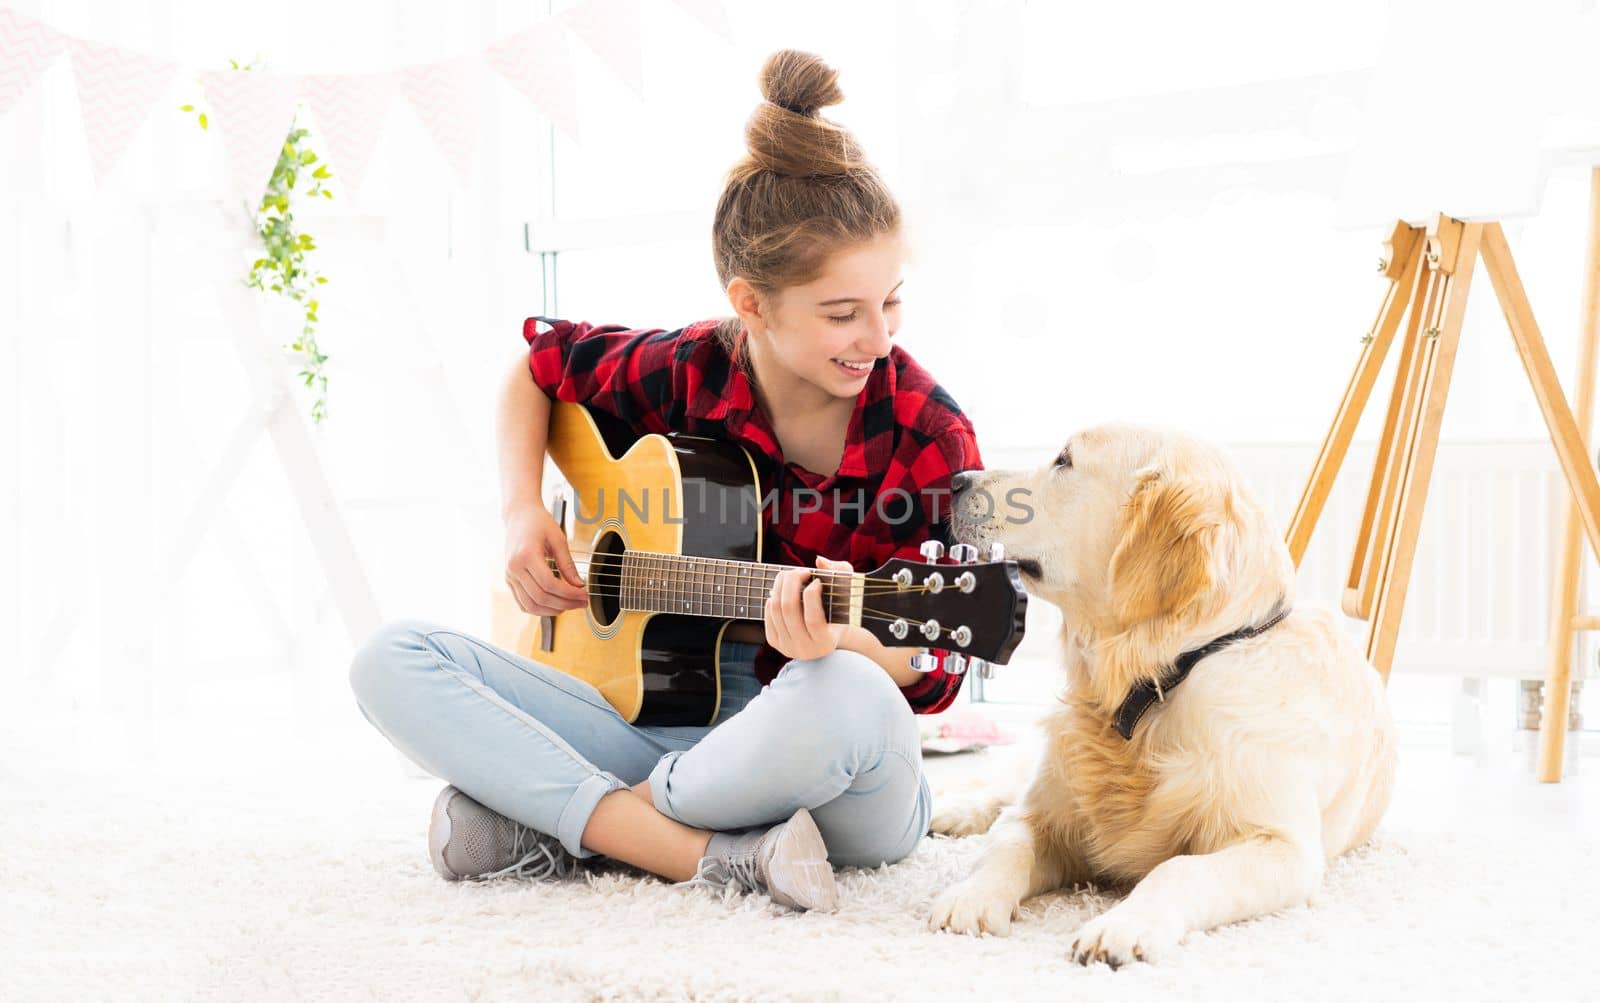 Smiling girl playing guitar to cute dog by GekaSkr